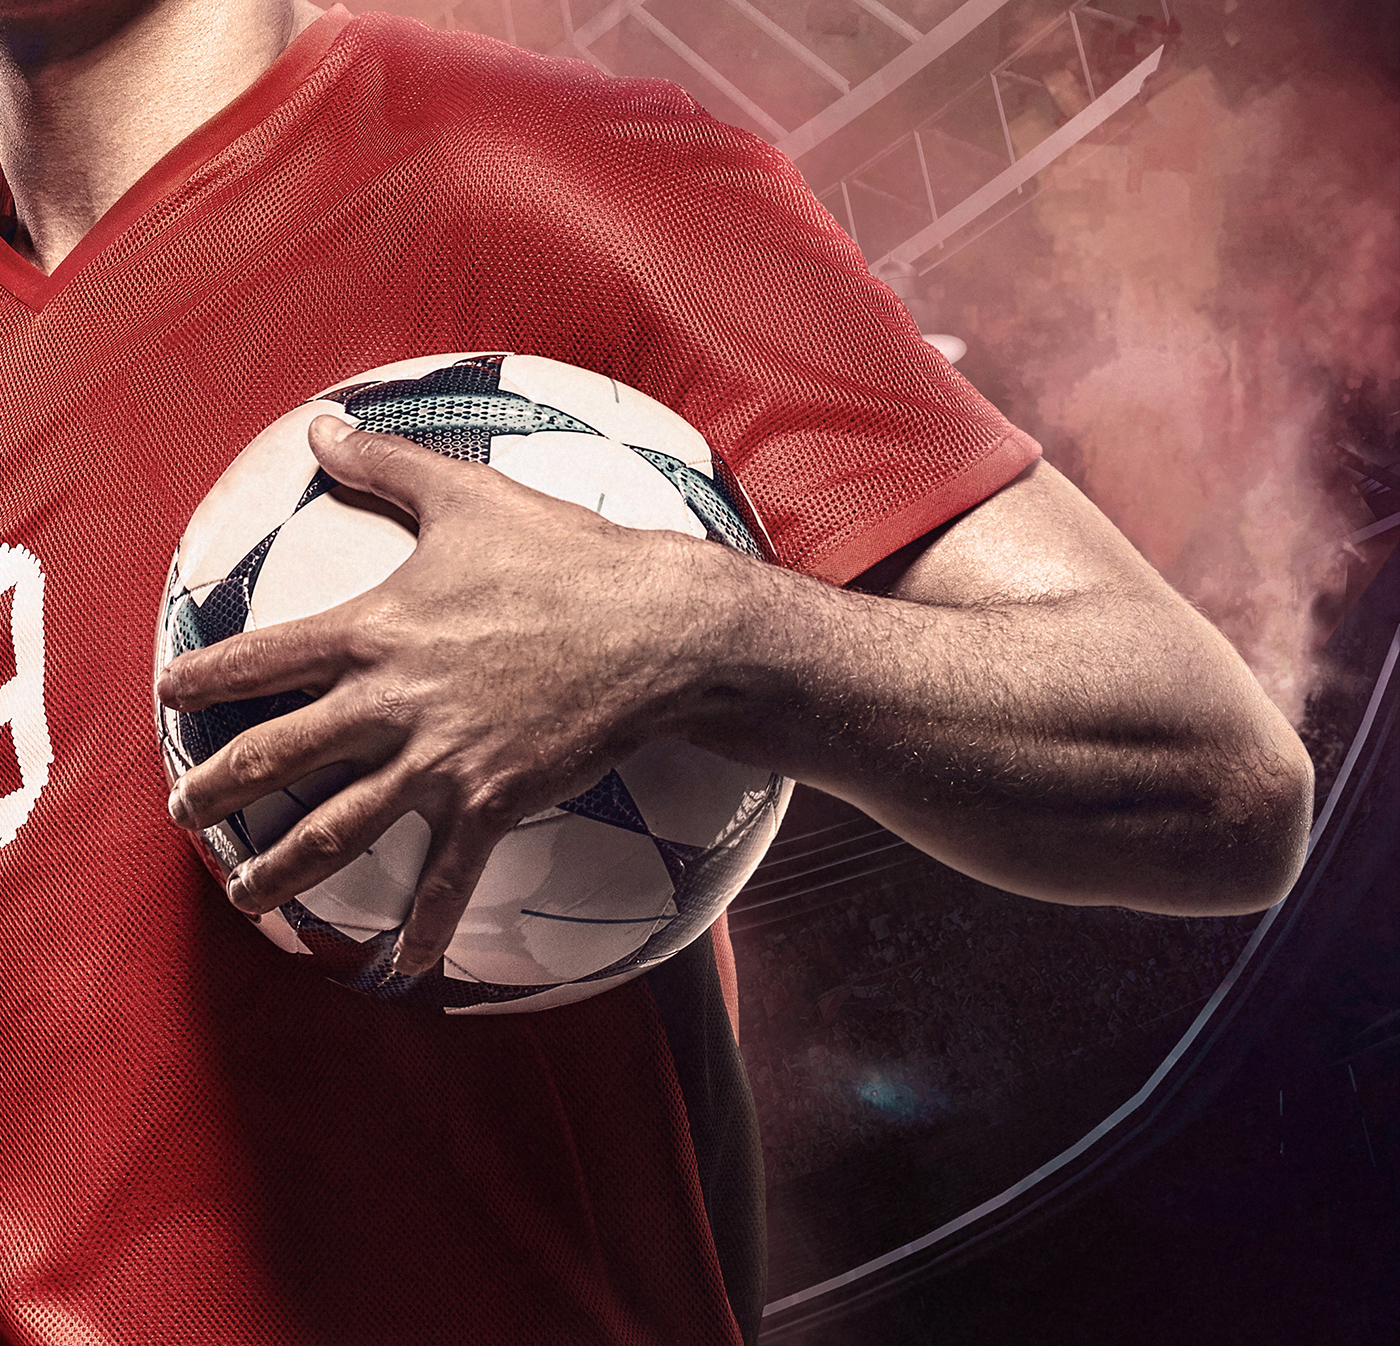 #Advertising #soccer #studio #DigitatArt #Compositing #digital   #retouching #sport